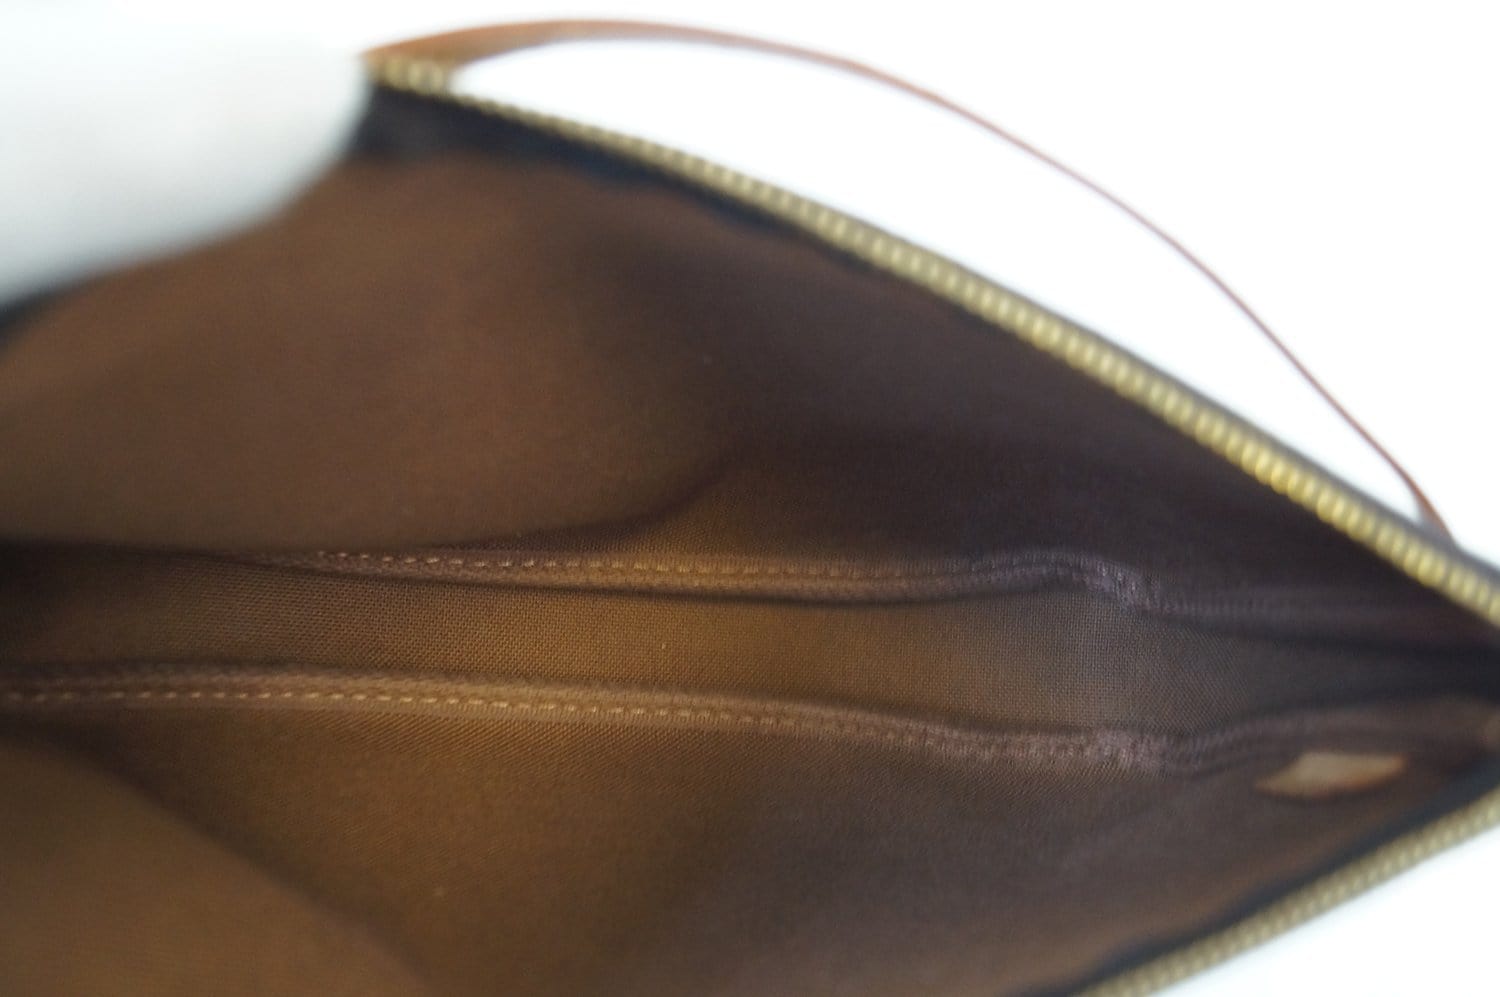 Pochette Clés XL Monogram Canvas - Handbags